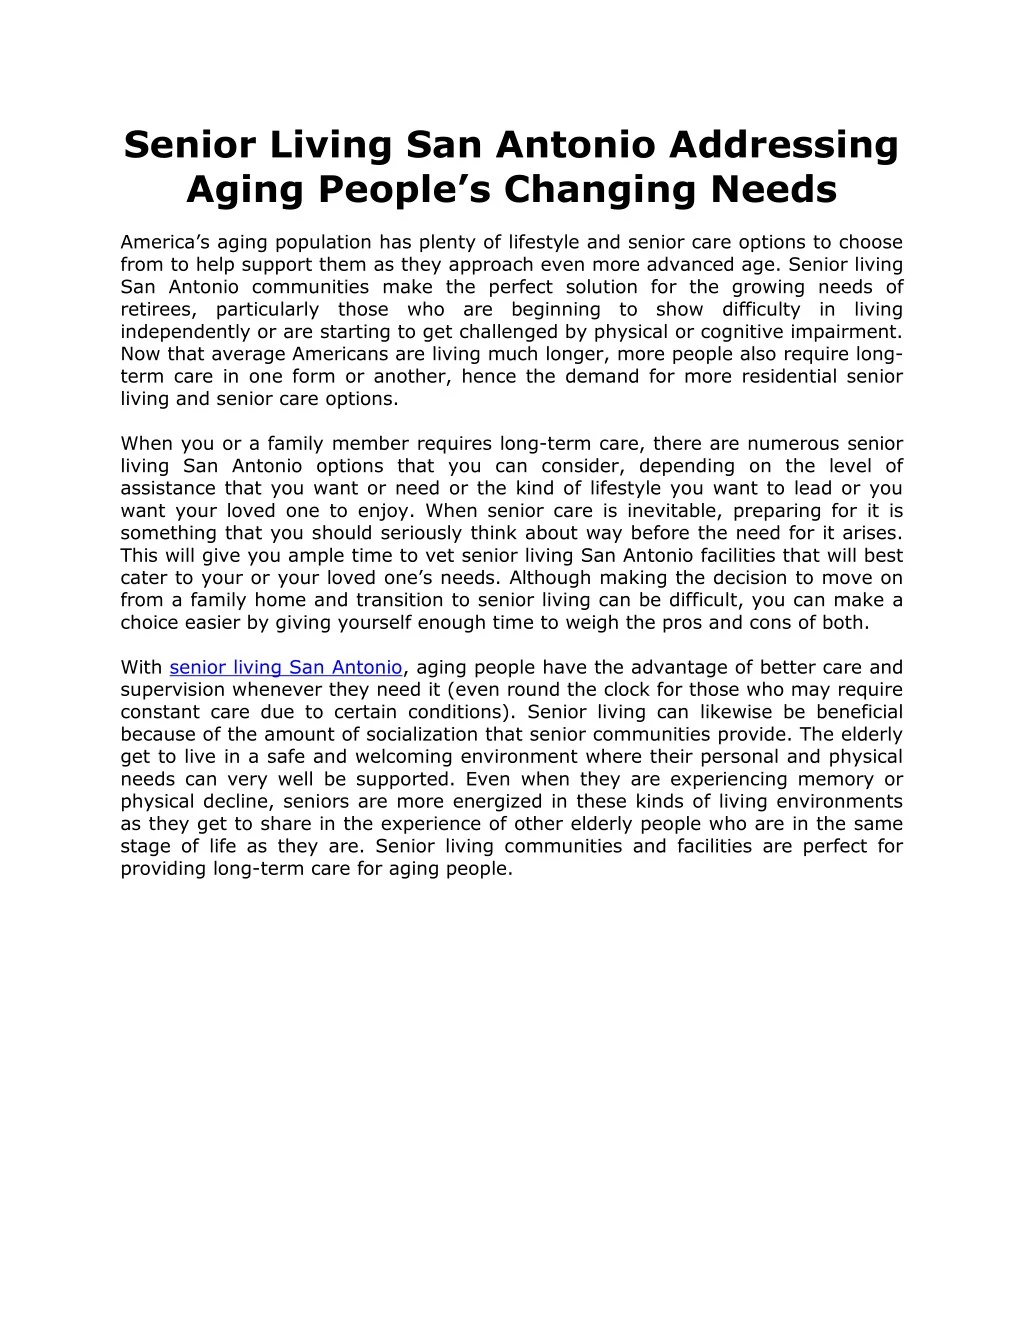 senior living san antonio addressing aging people